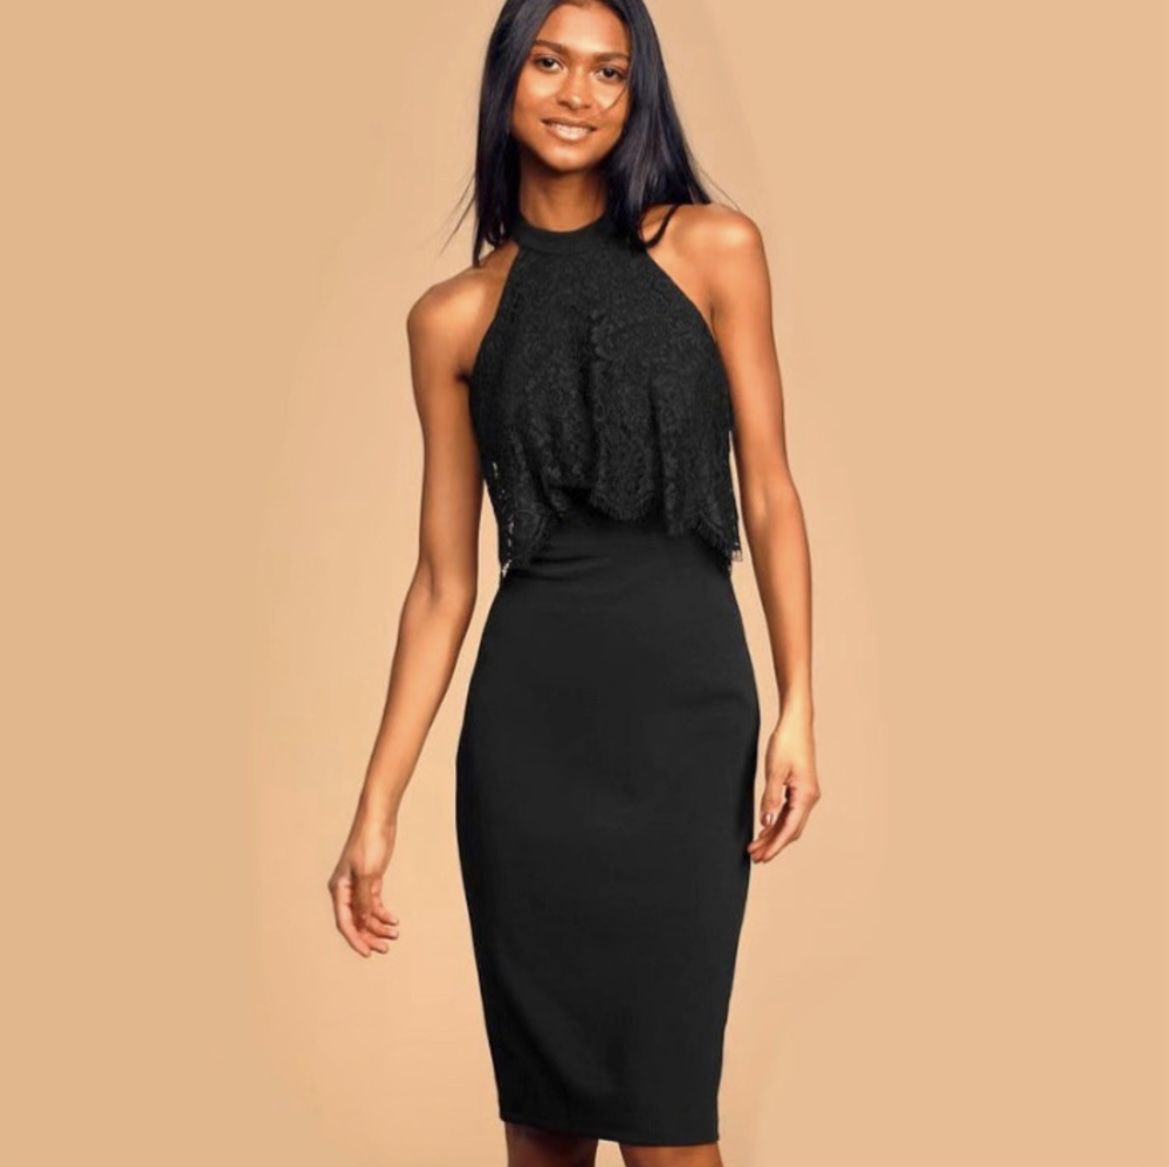 Brand New Lulu’s Black Lace Halter Dress - Size Small 